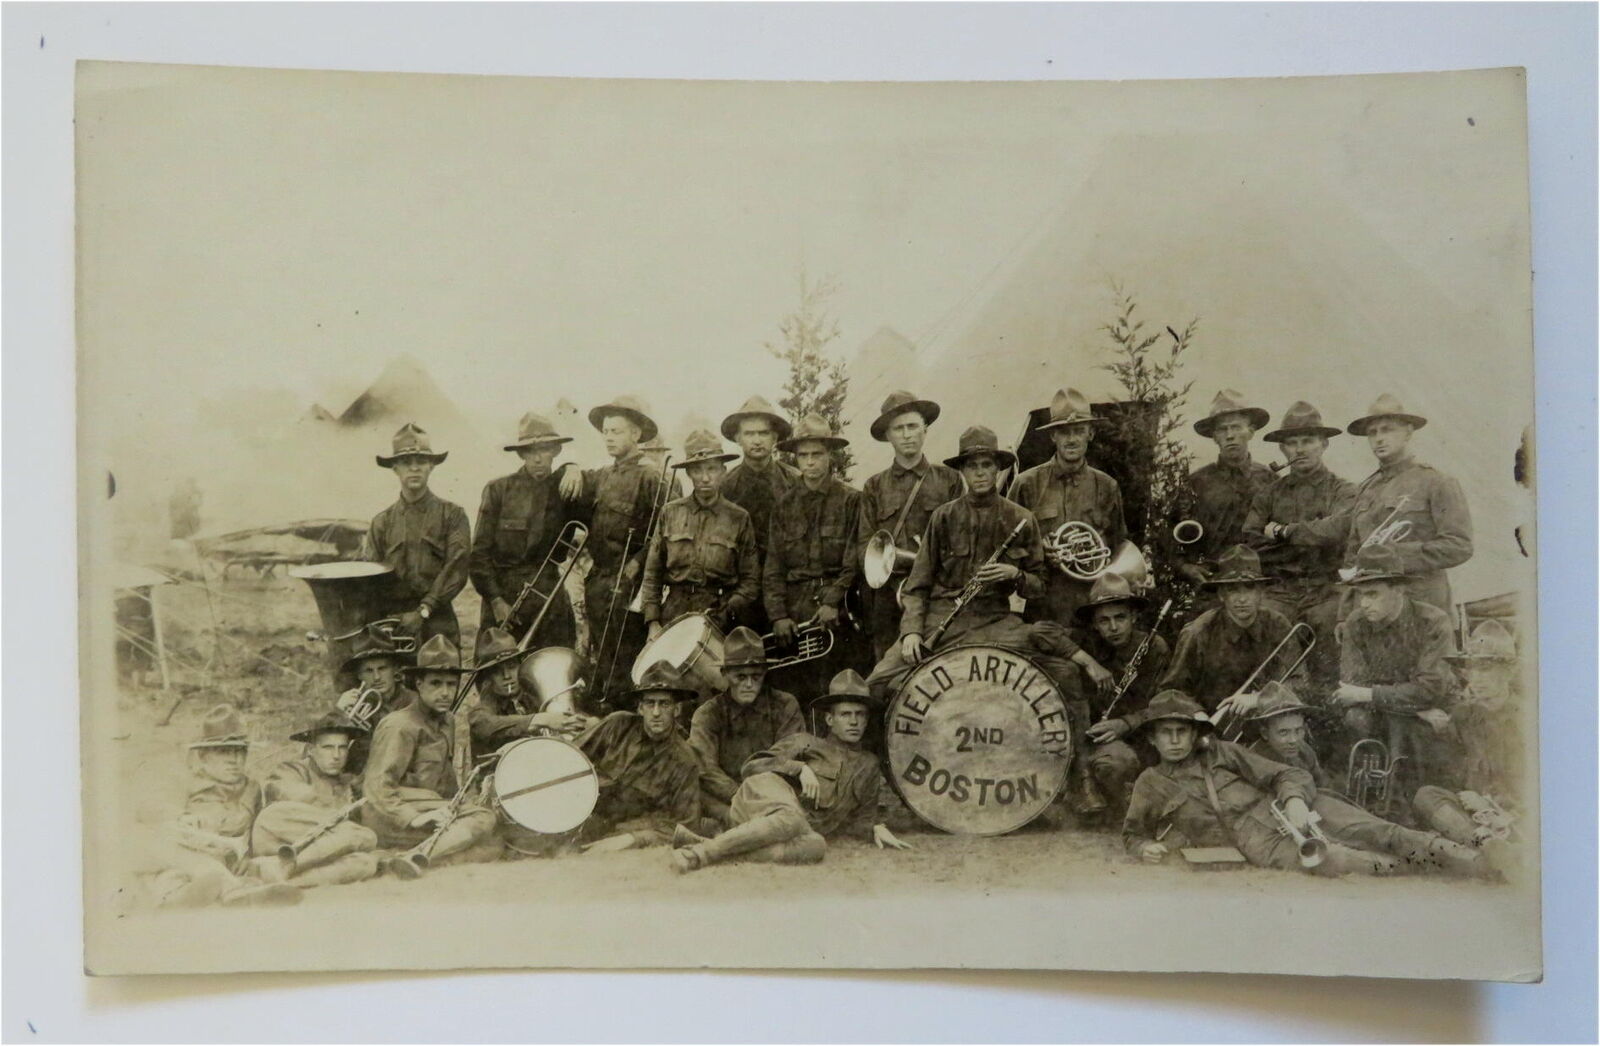 2nd Field Artillery U.S. Army Band Pyramids c. 1920 Real Photo Postcard